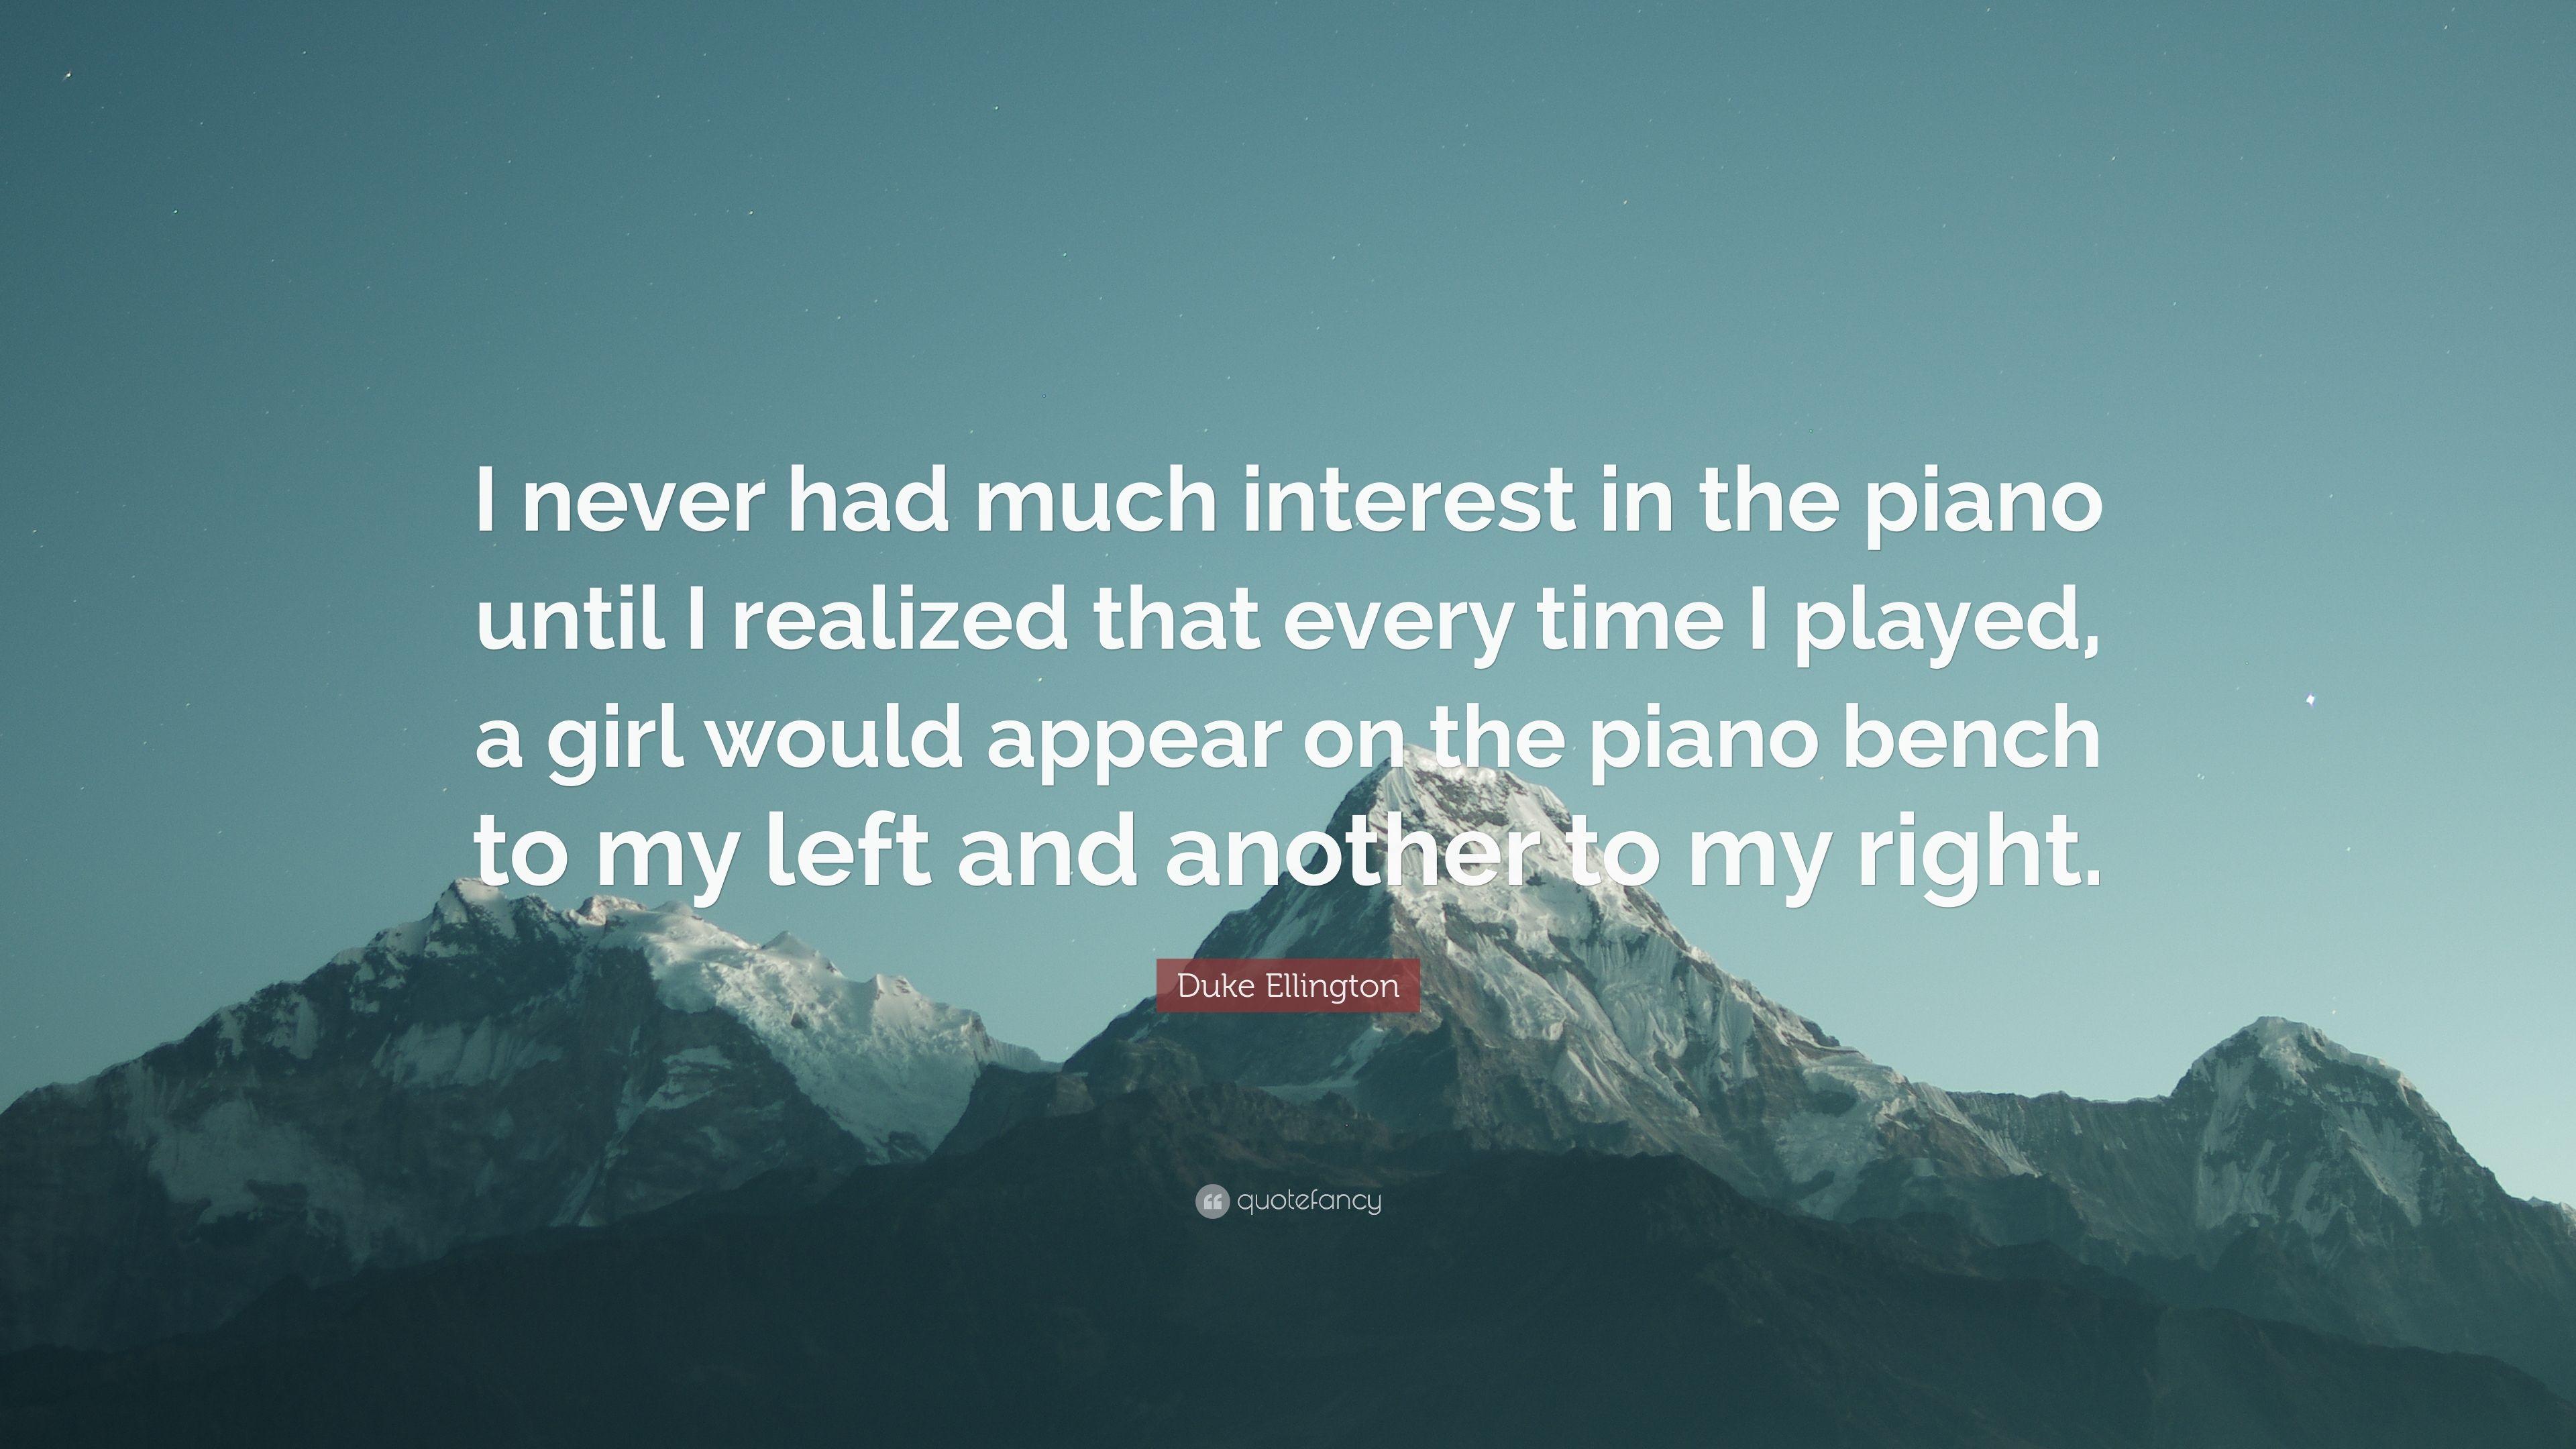 Duke Ellington Quote: “I never had much interest in